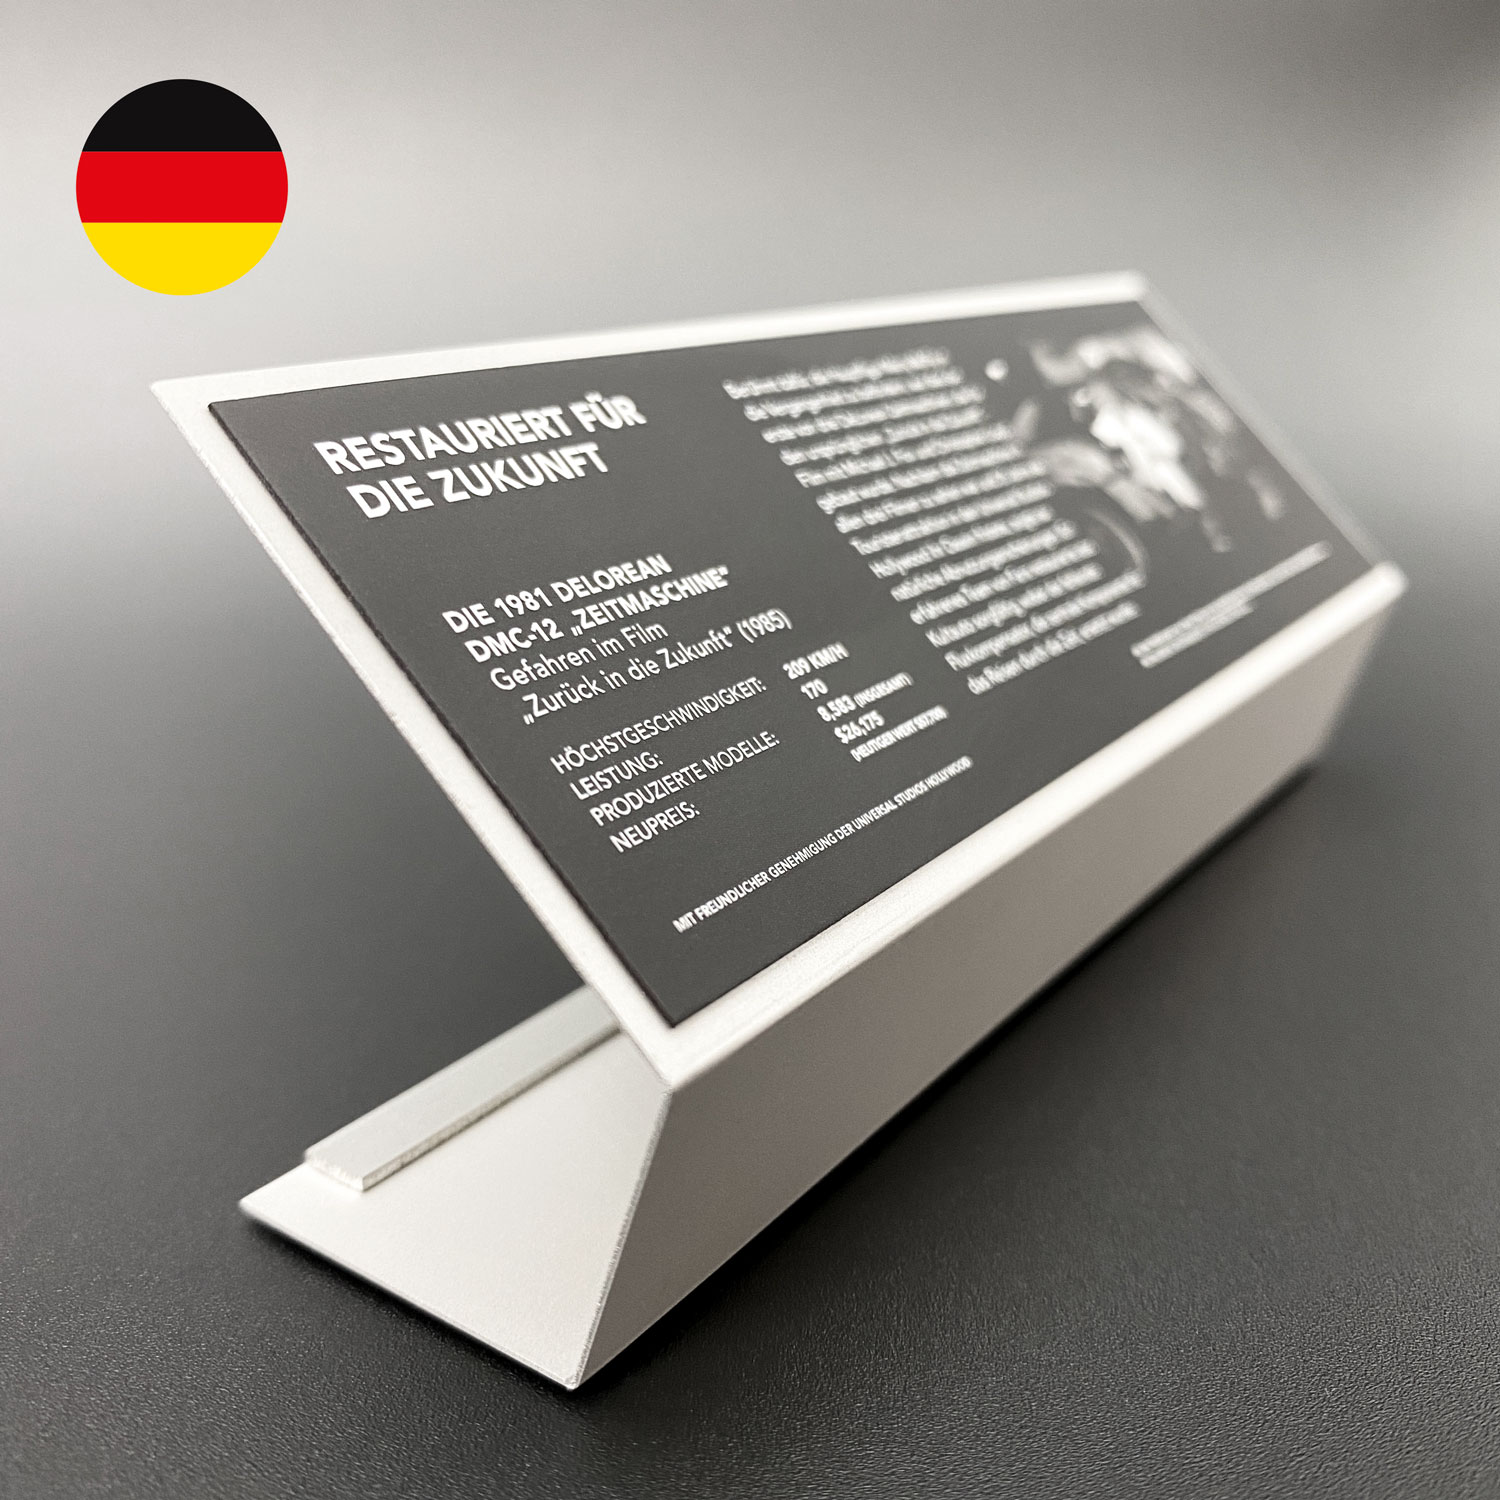 DeLorean model Exhibition Display Stand in German language